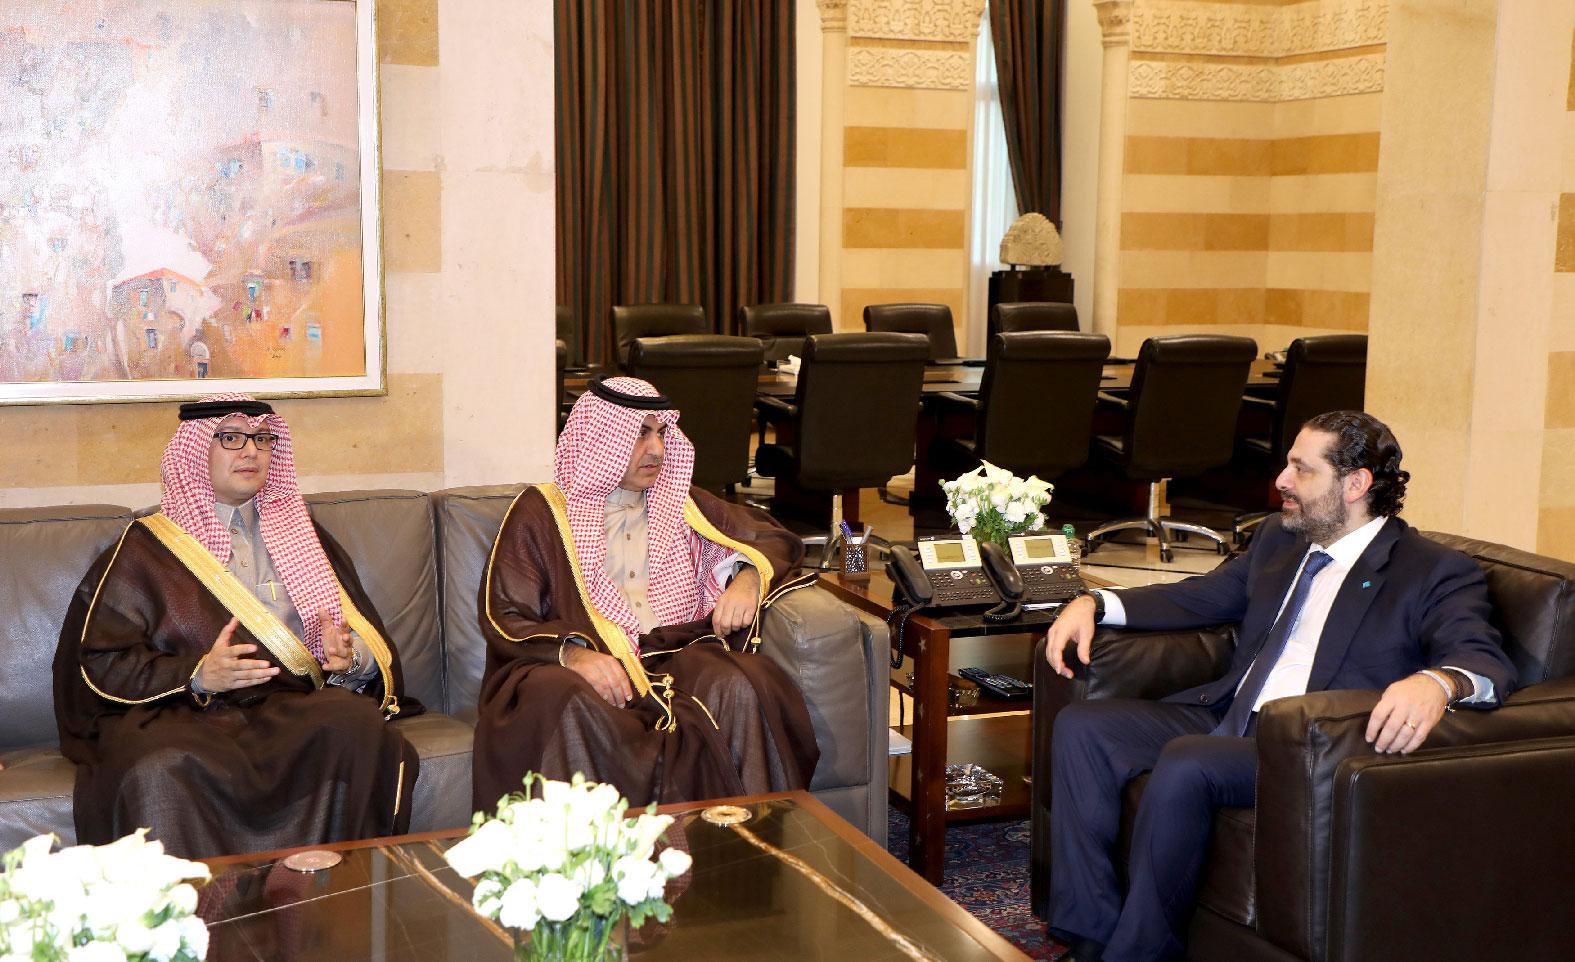 Lebanon's Prime Minister Saad al-Hariri meets with Nizar al-Aloula, visiting Saudi envoy and Saudi Ambassador to Lebanon Walid bin Abdullah Bukhari at the governmental palace in Beirut, Lebanon February 13, 2019.